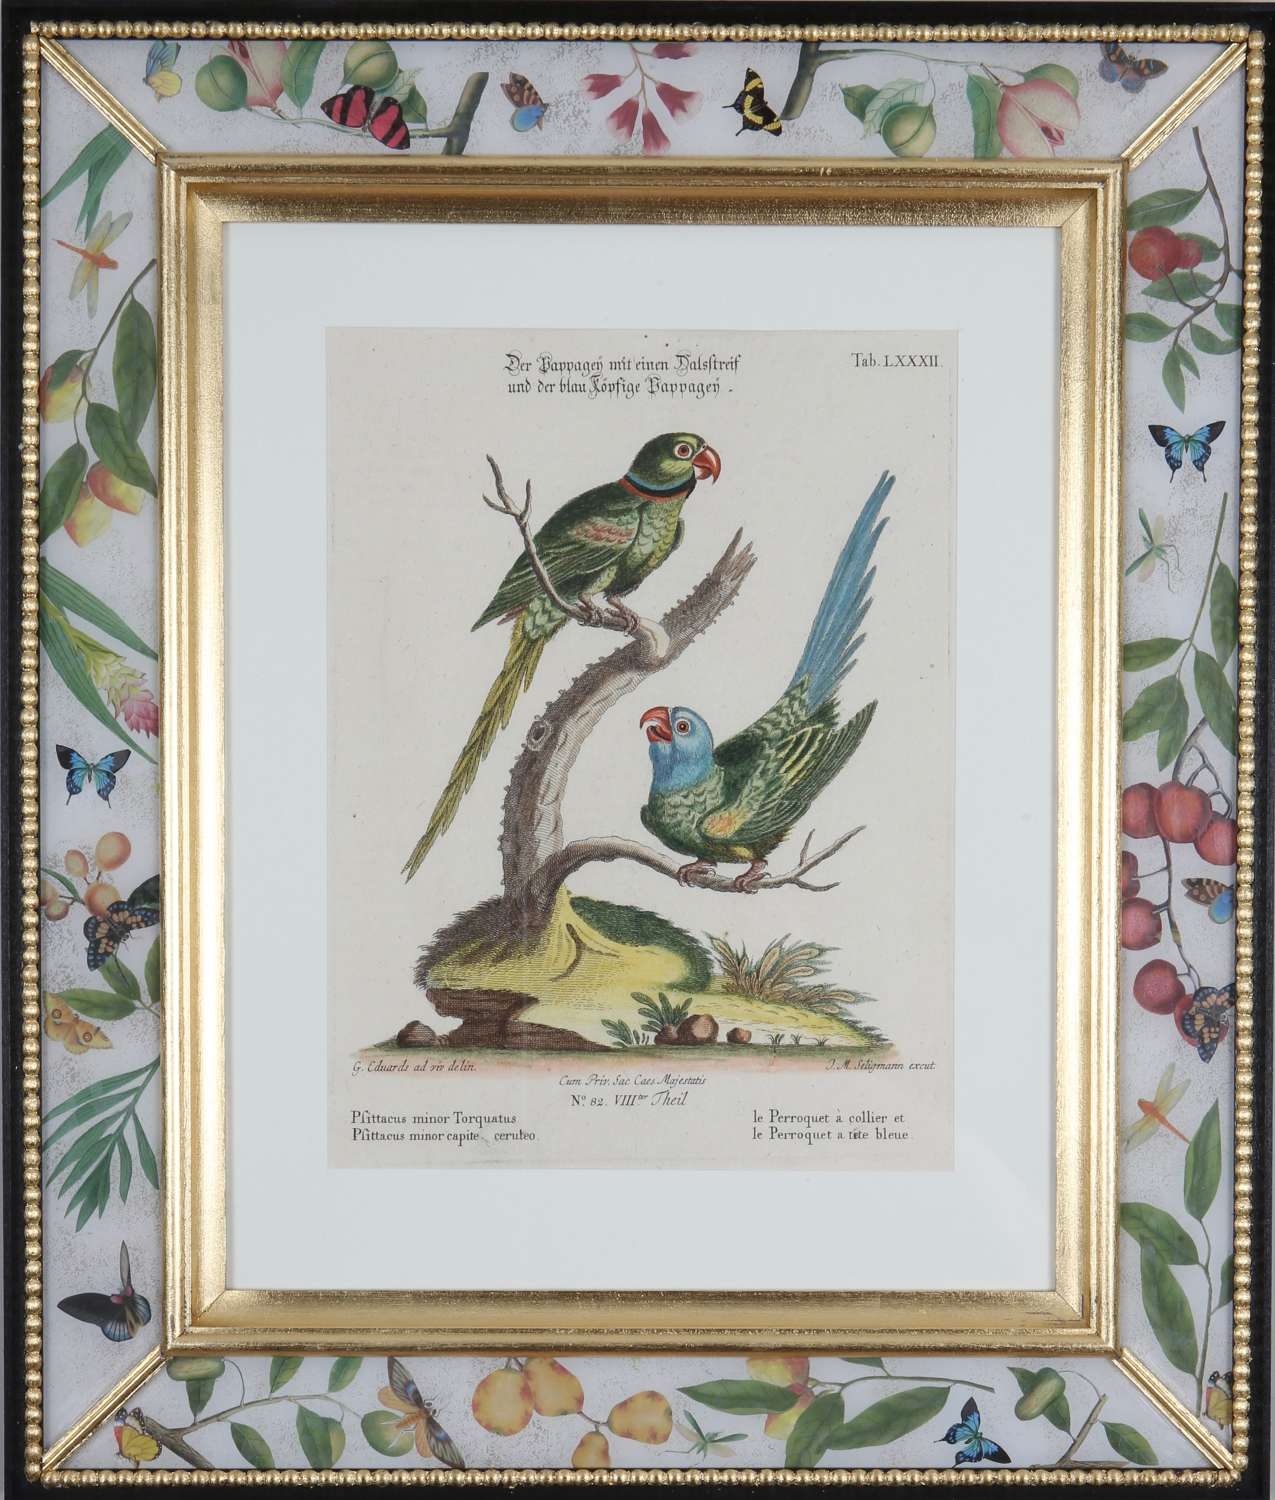 George Edwards : engravings of parrots, publ. by J. Seligmann, 1770.